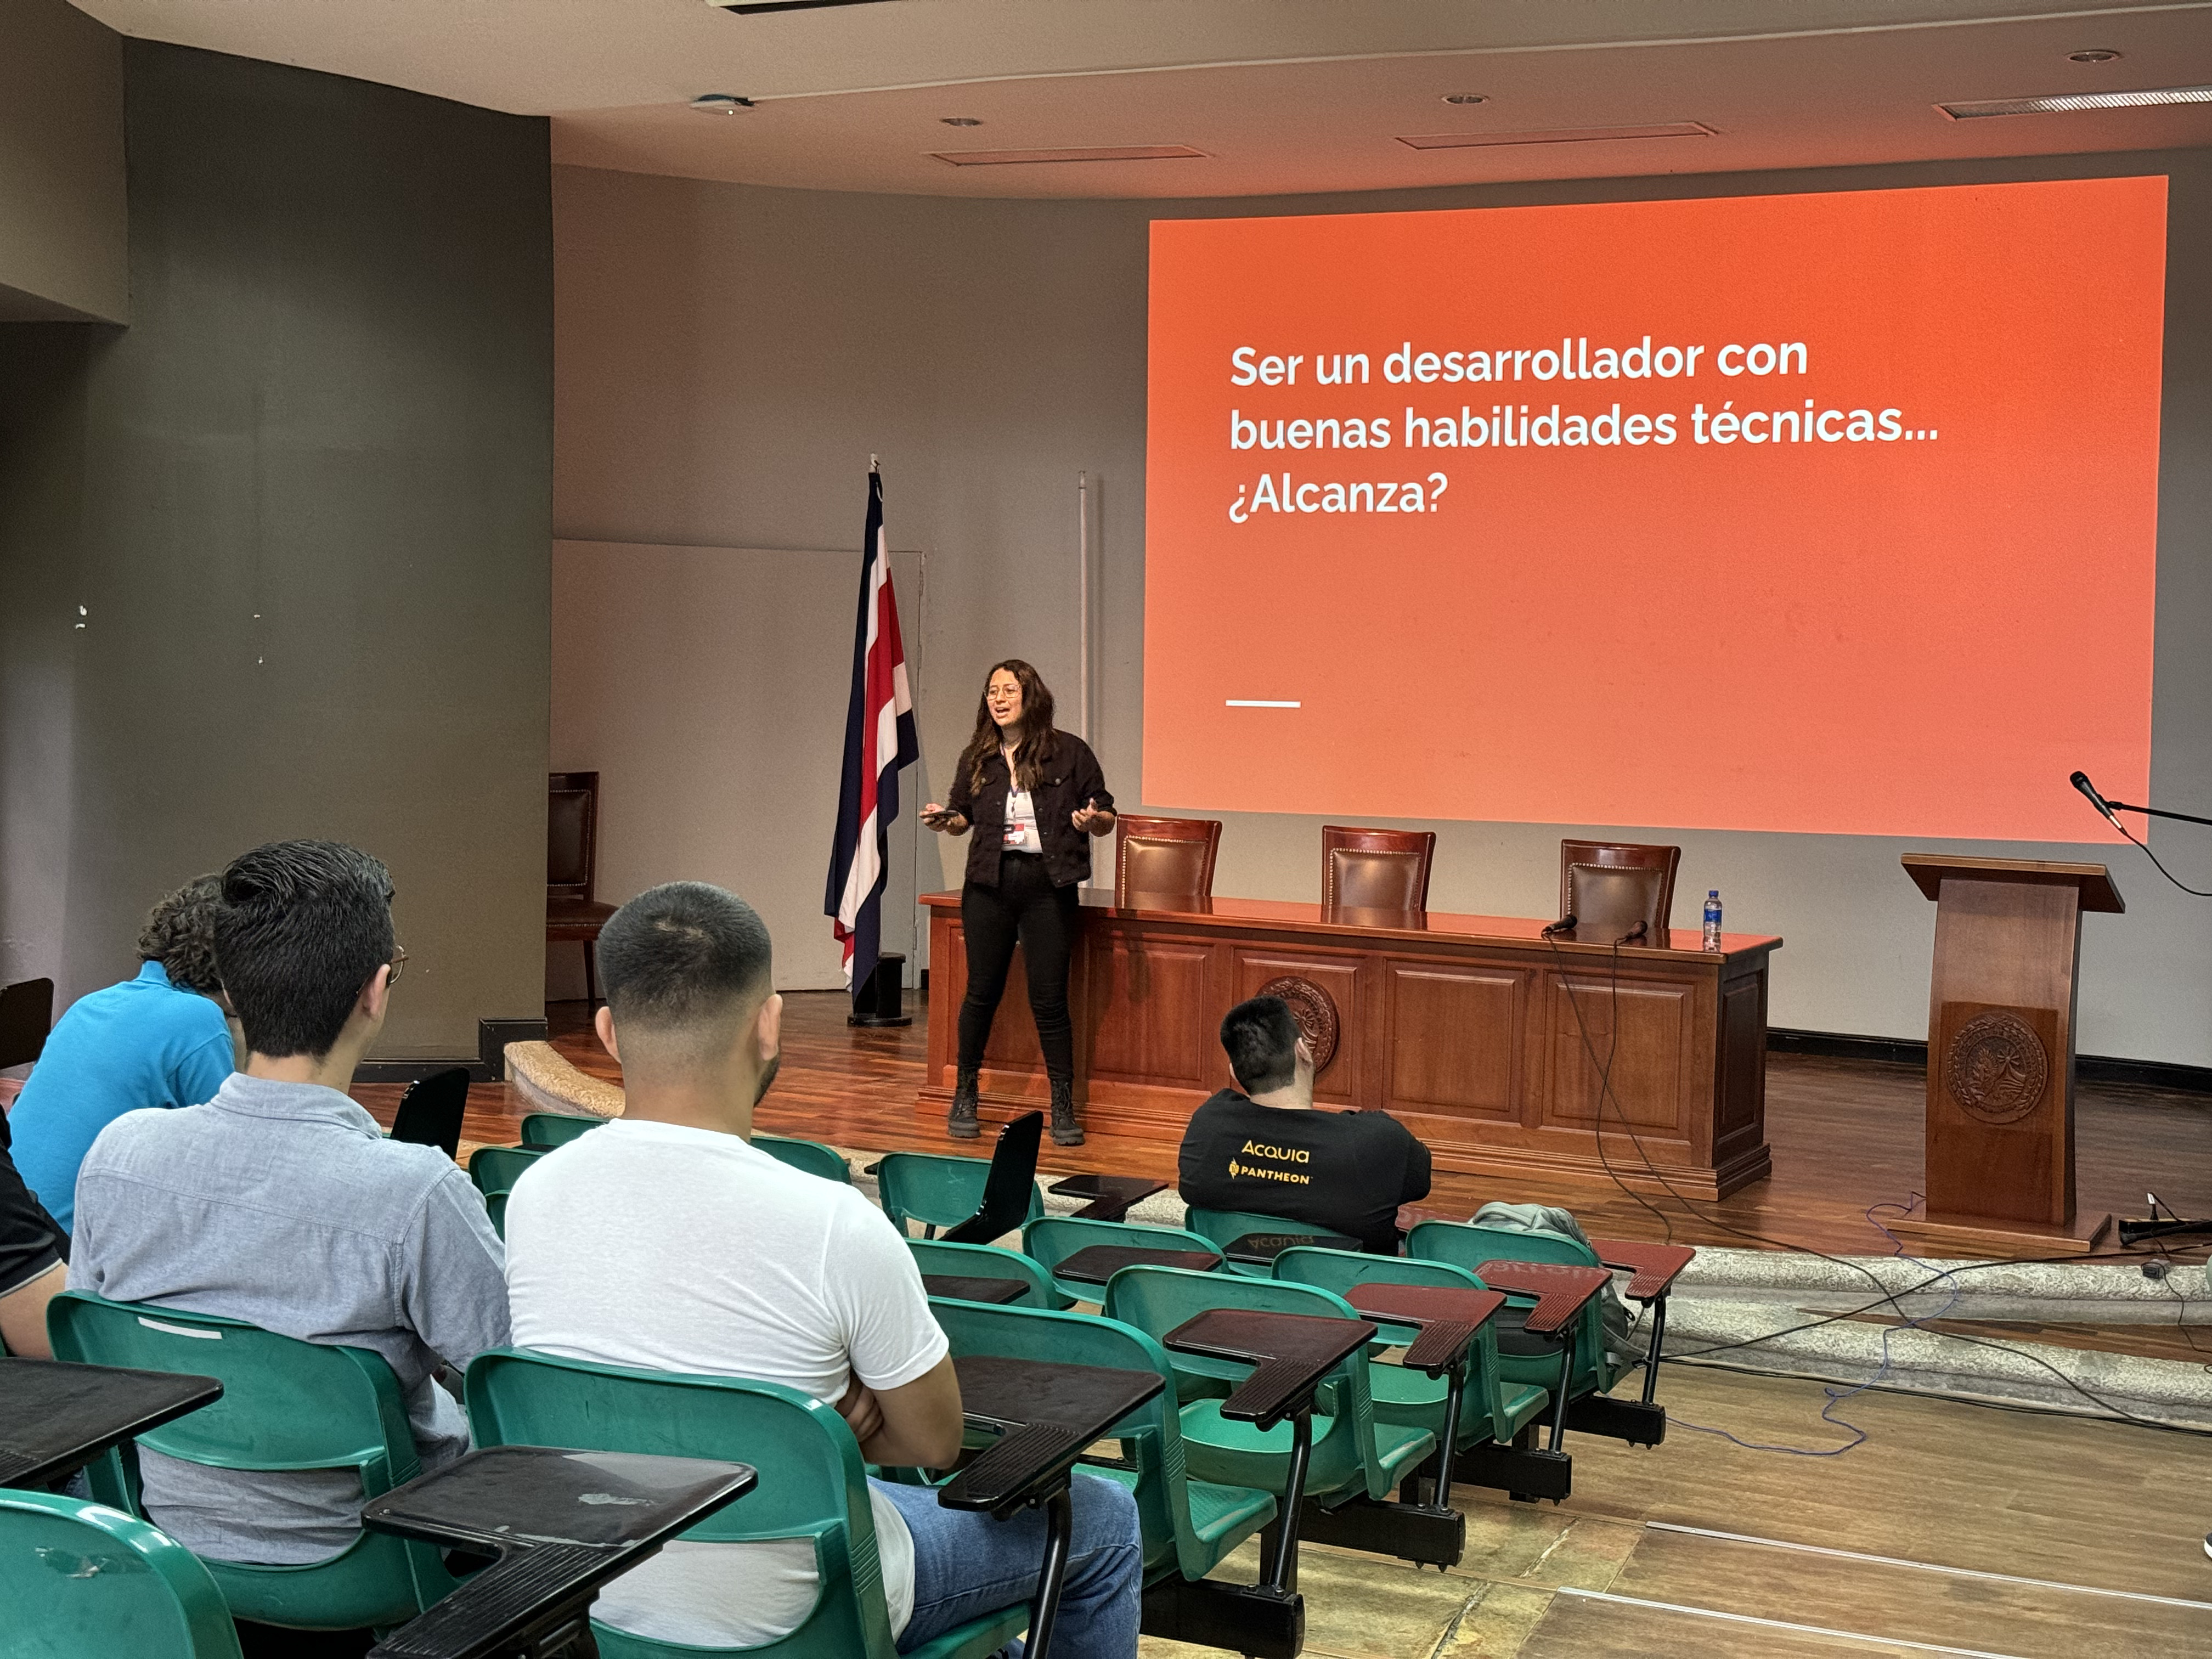 Presentation: "I'm a developer and I'm assertive!" by Yuvania Castillo